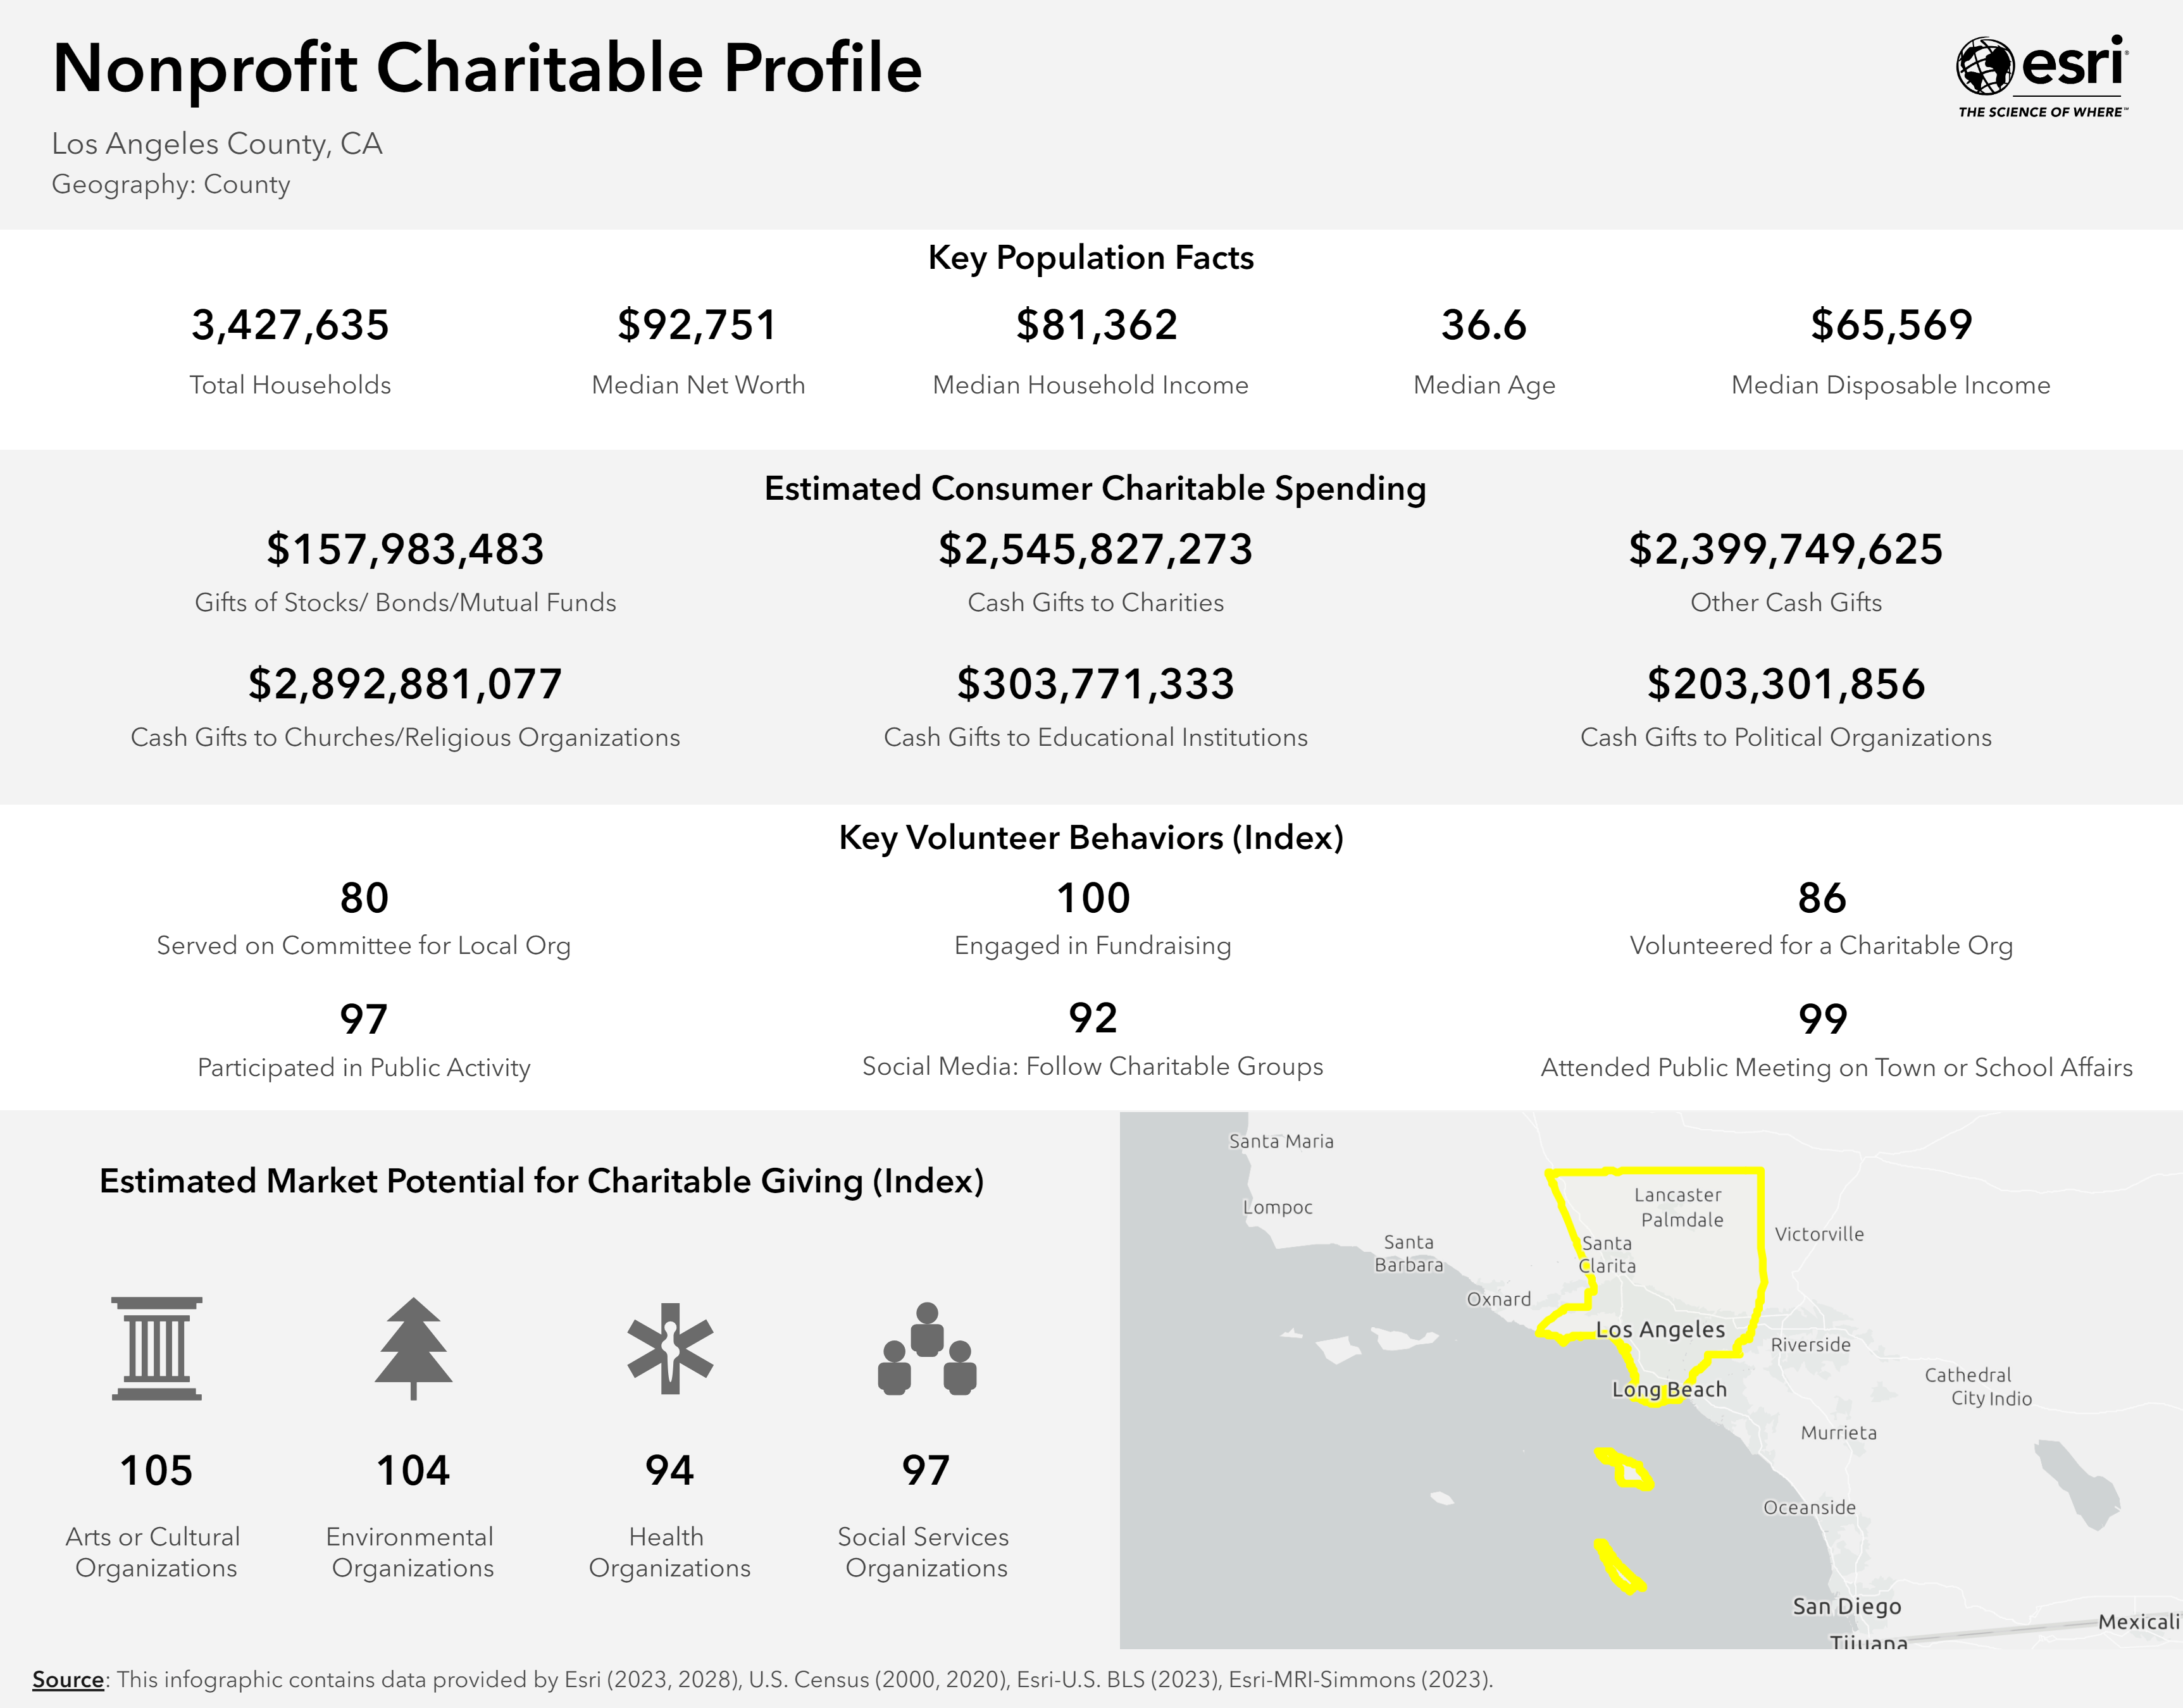 Nonprofit Charitable Profile infographic